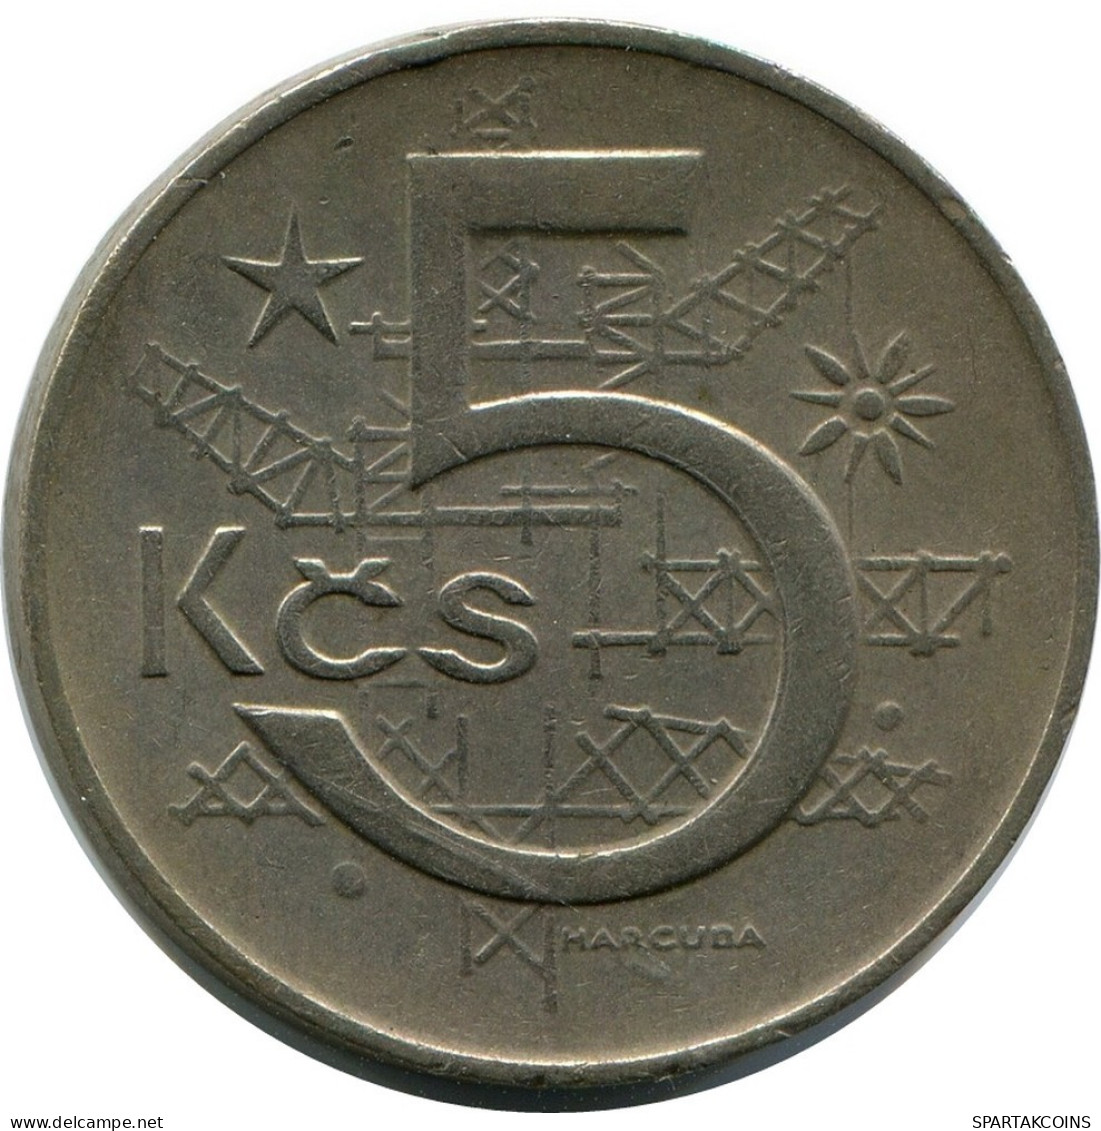 5 KORUN 1969 TSCHECHOSLOWAKEI CZECHOSLOWAKEI SLOVAKIA Münze #AR232.D.A - Cecoslovacchia